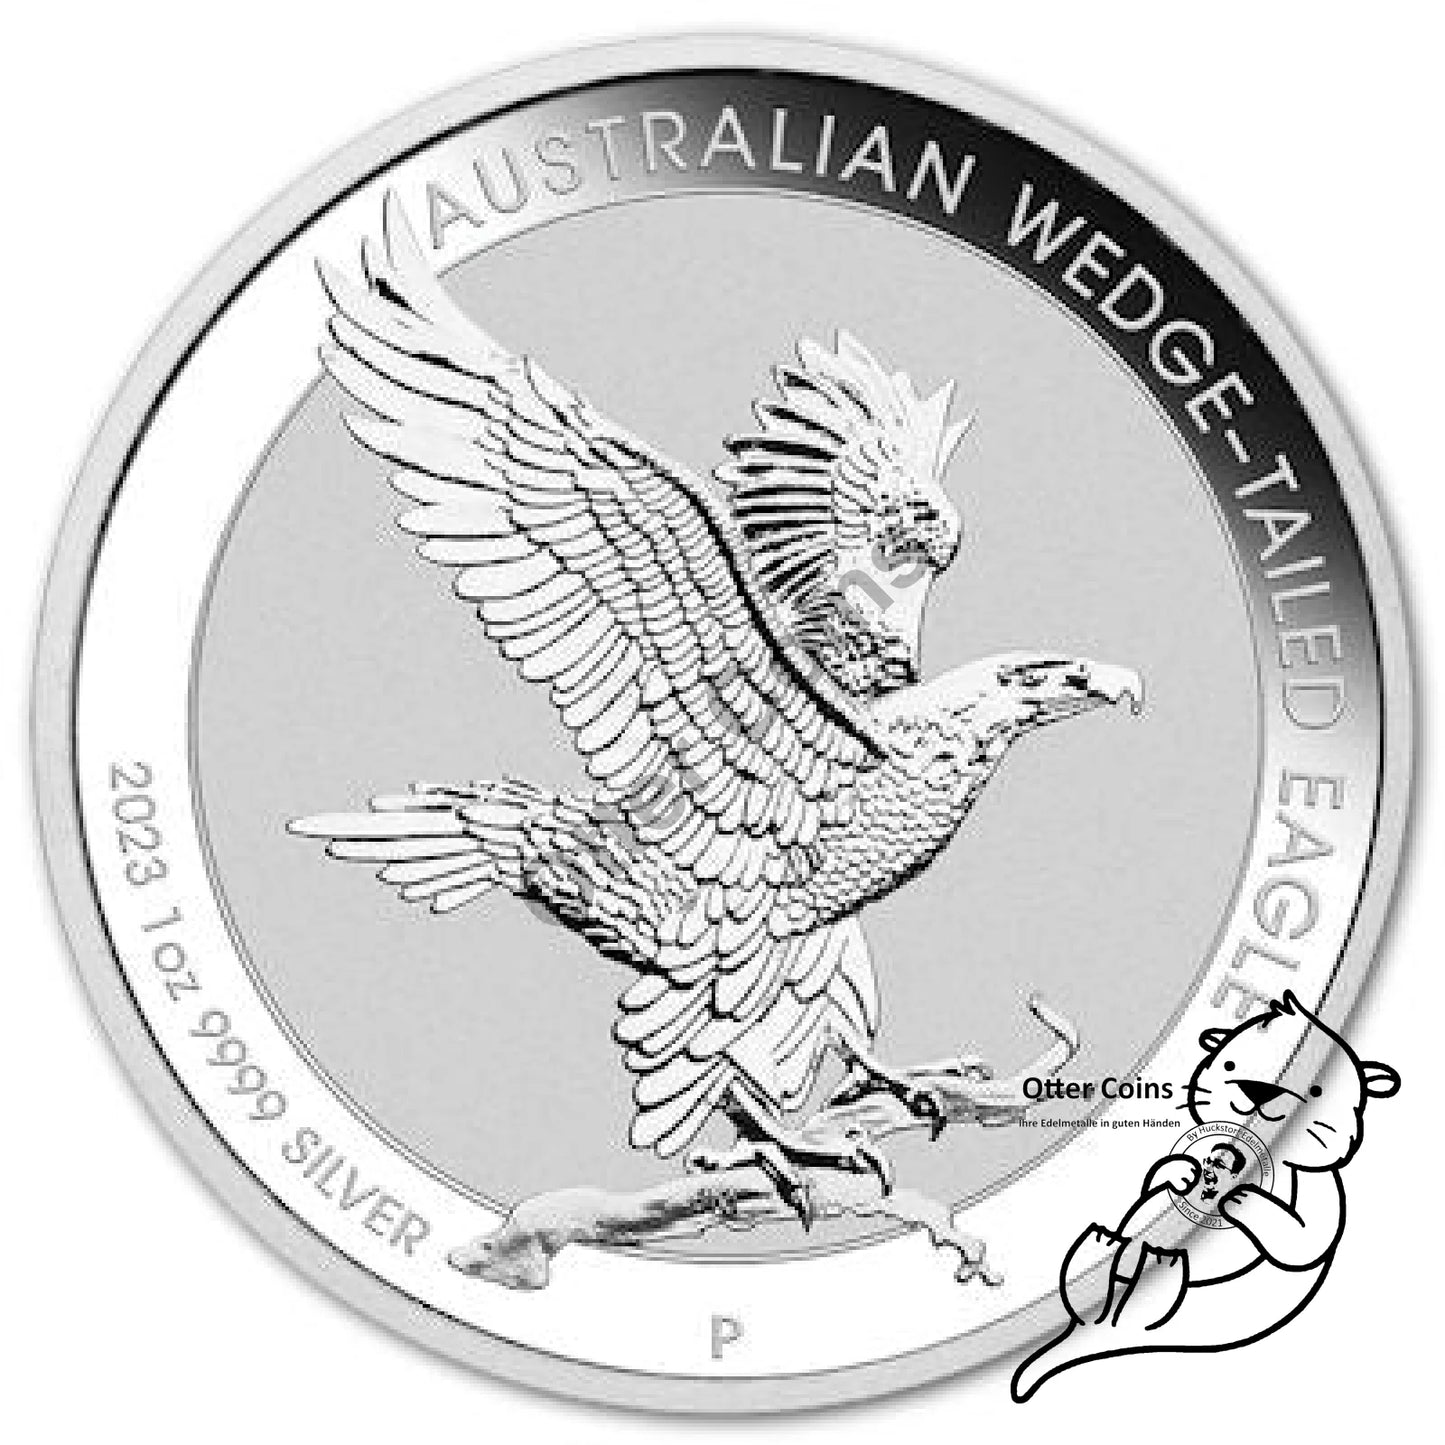 Australian Wedge Tailed Eagle 2023 1 oz Silbermünze*